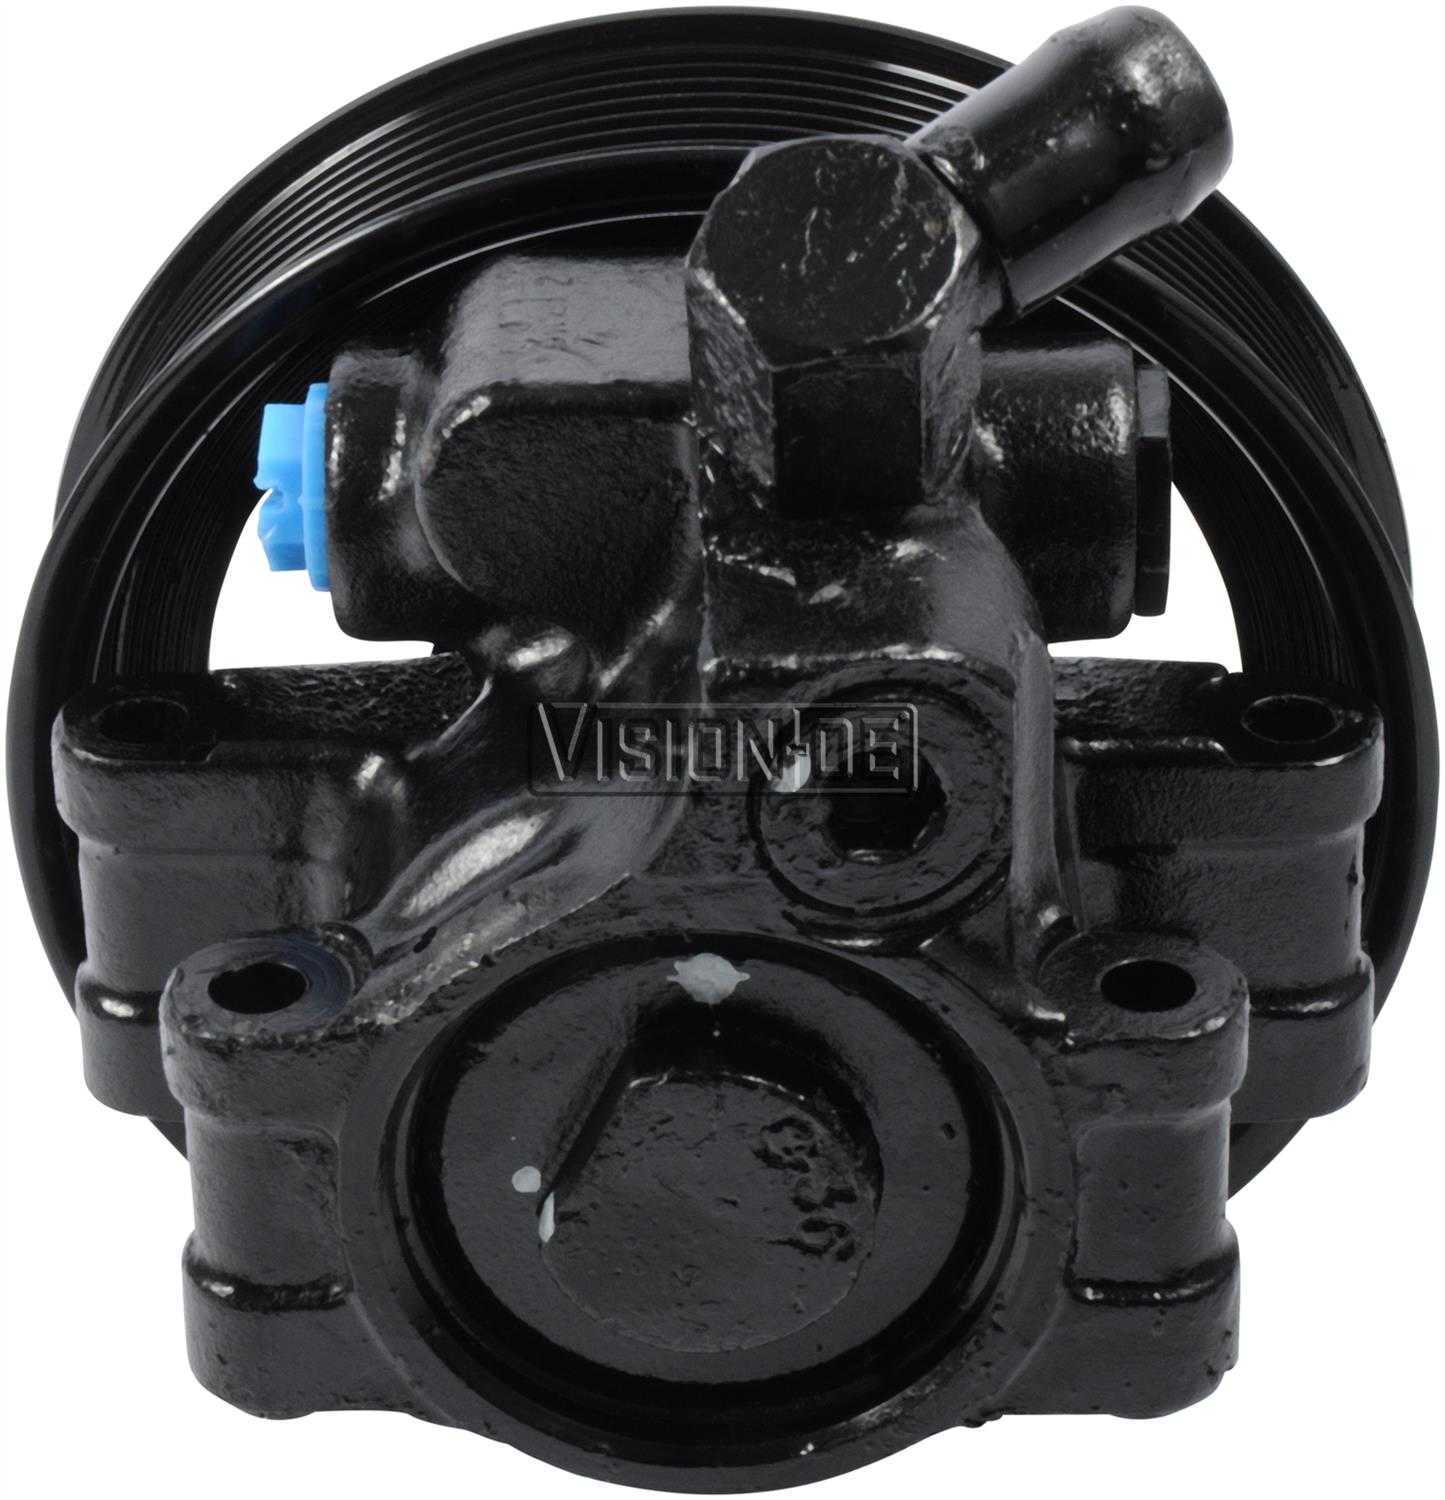 VISION-OE - Reman Power Steering Pump - VOE 712-0115A2